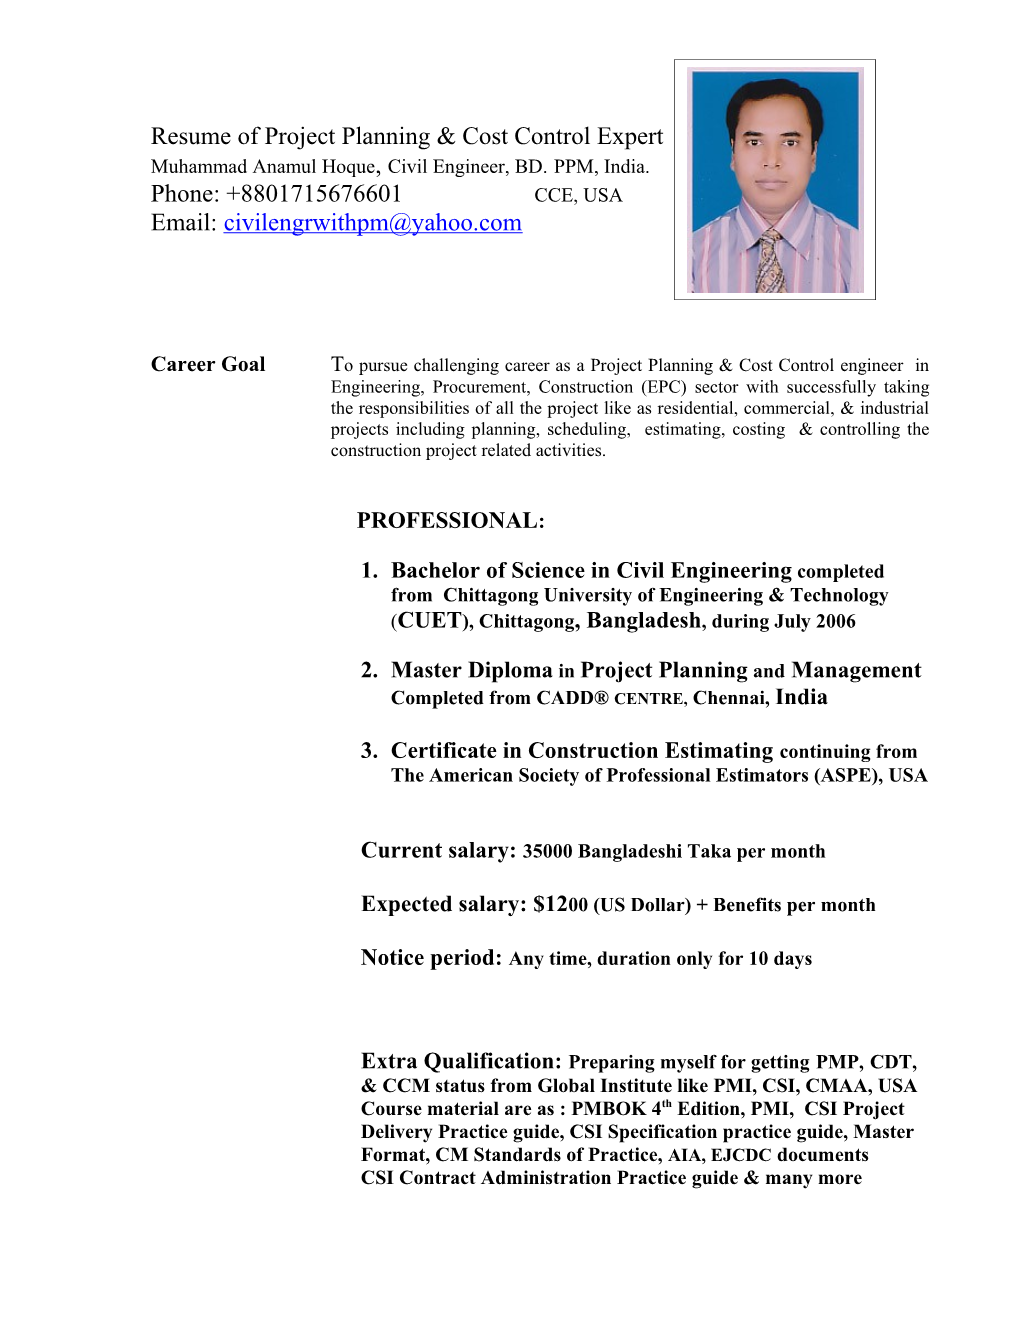 Muhammad Anamul Hoque, Civil Engineer, BD. PPM, India